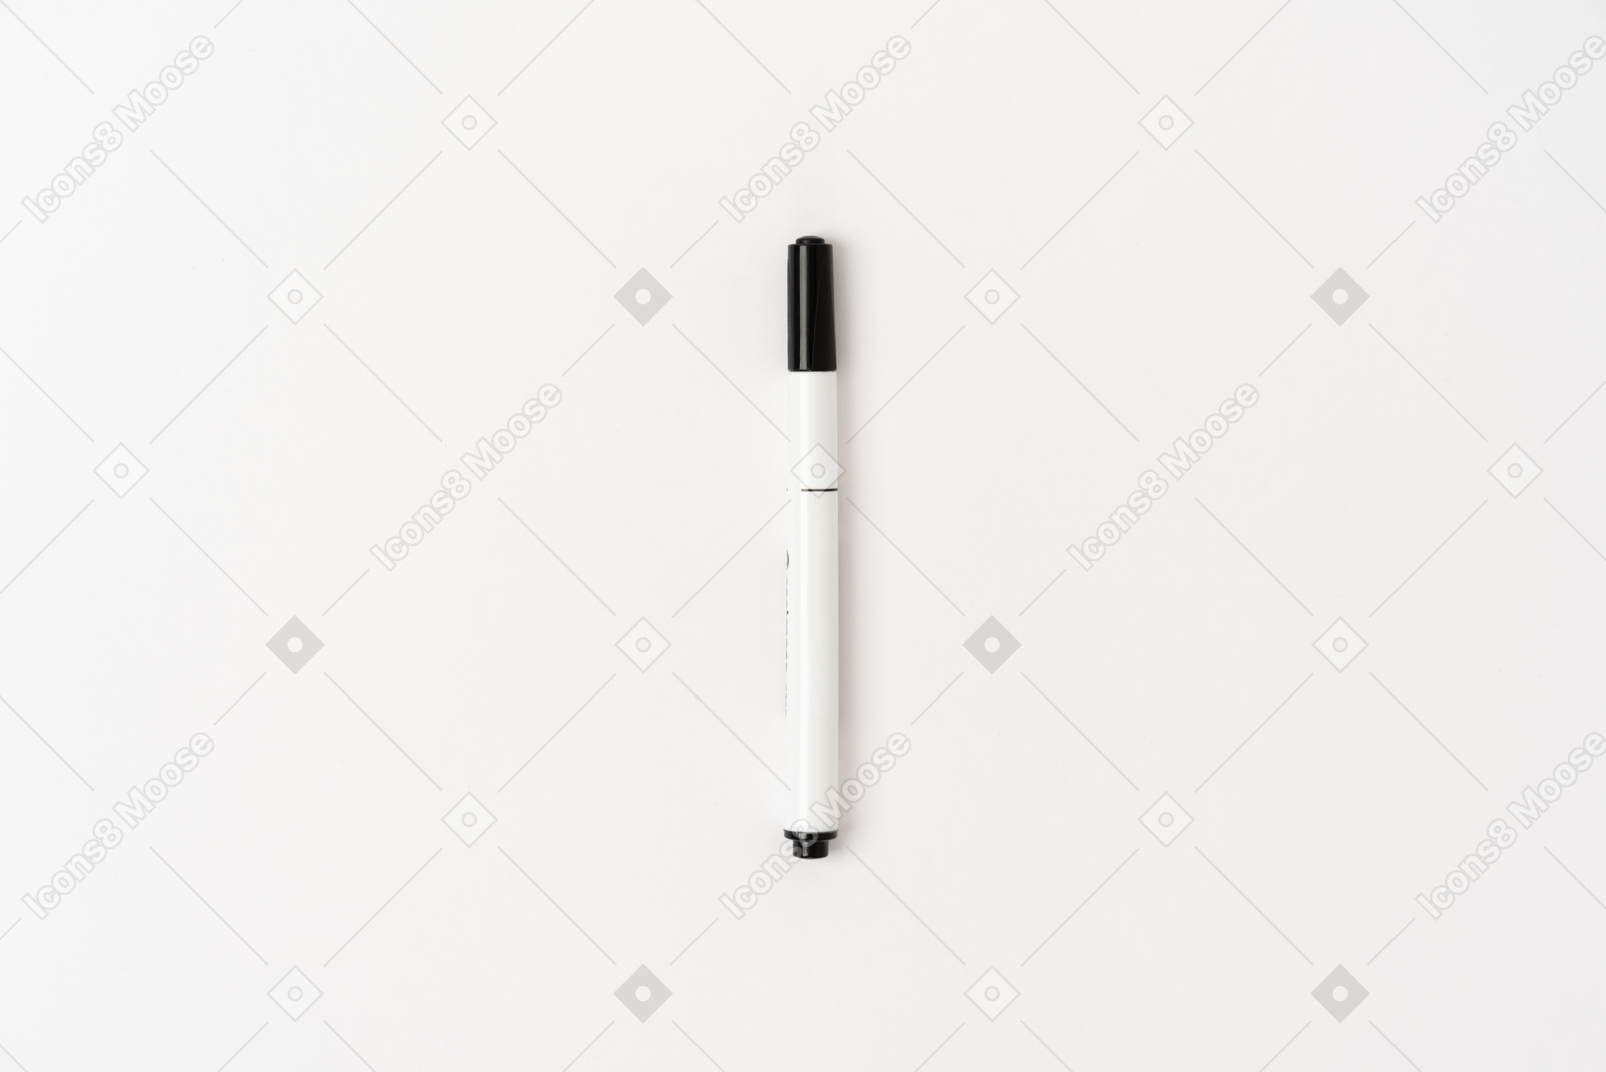 White and black pen